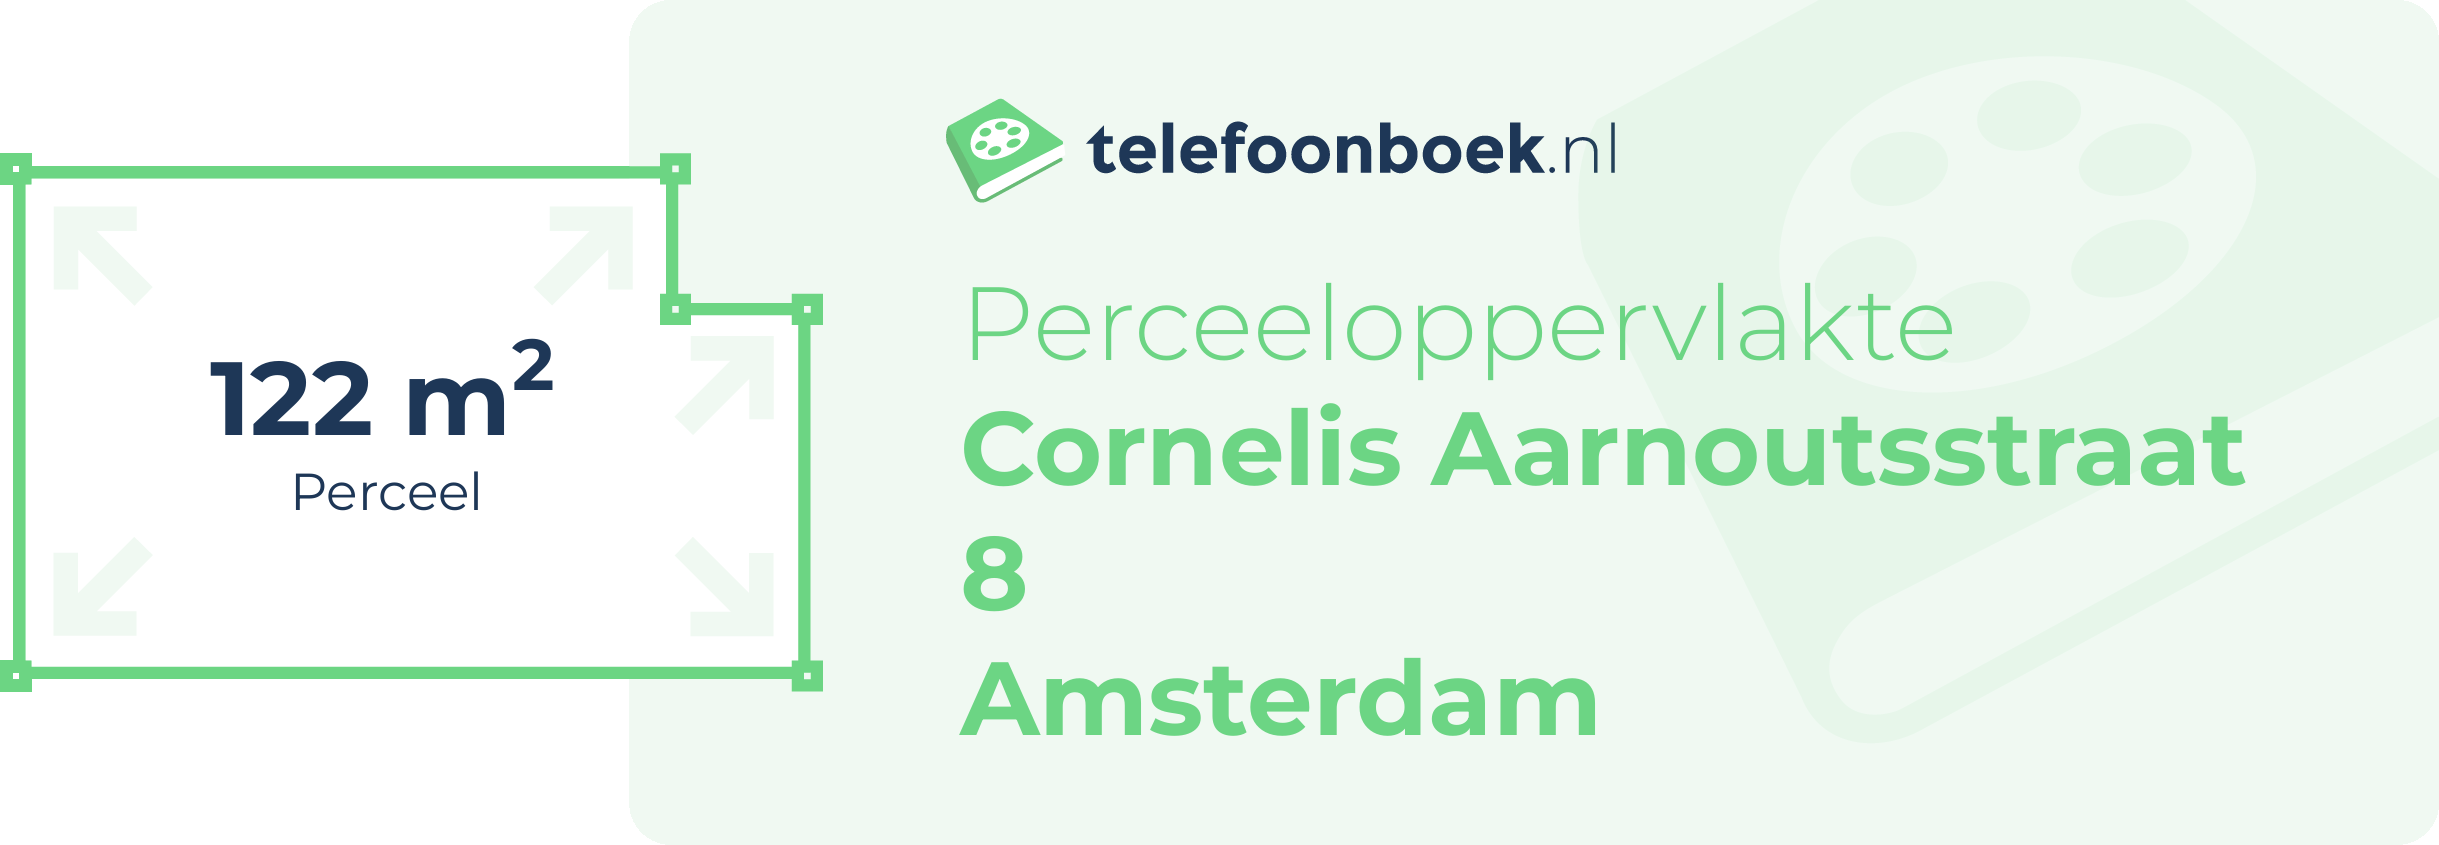 Perceeloppervlakte Cornelis Aarnoutsstraat 8 Amsterdam